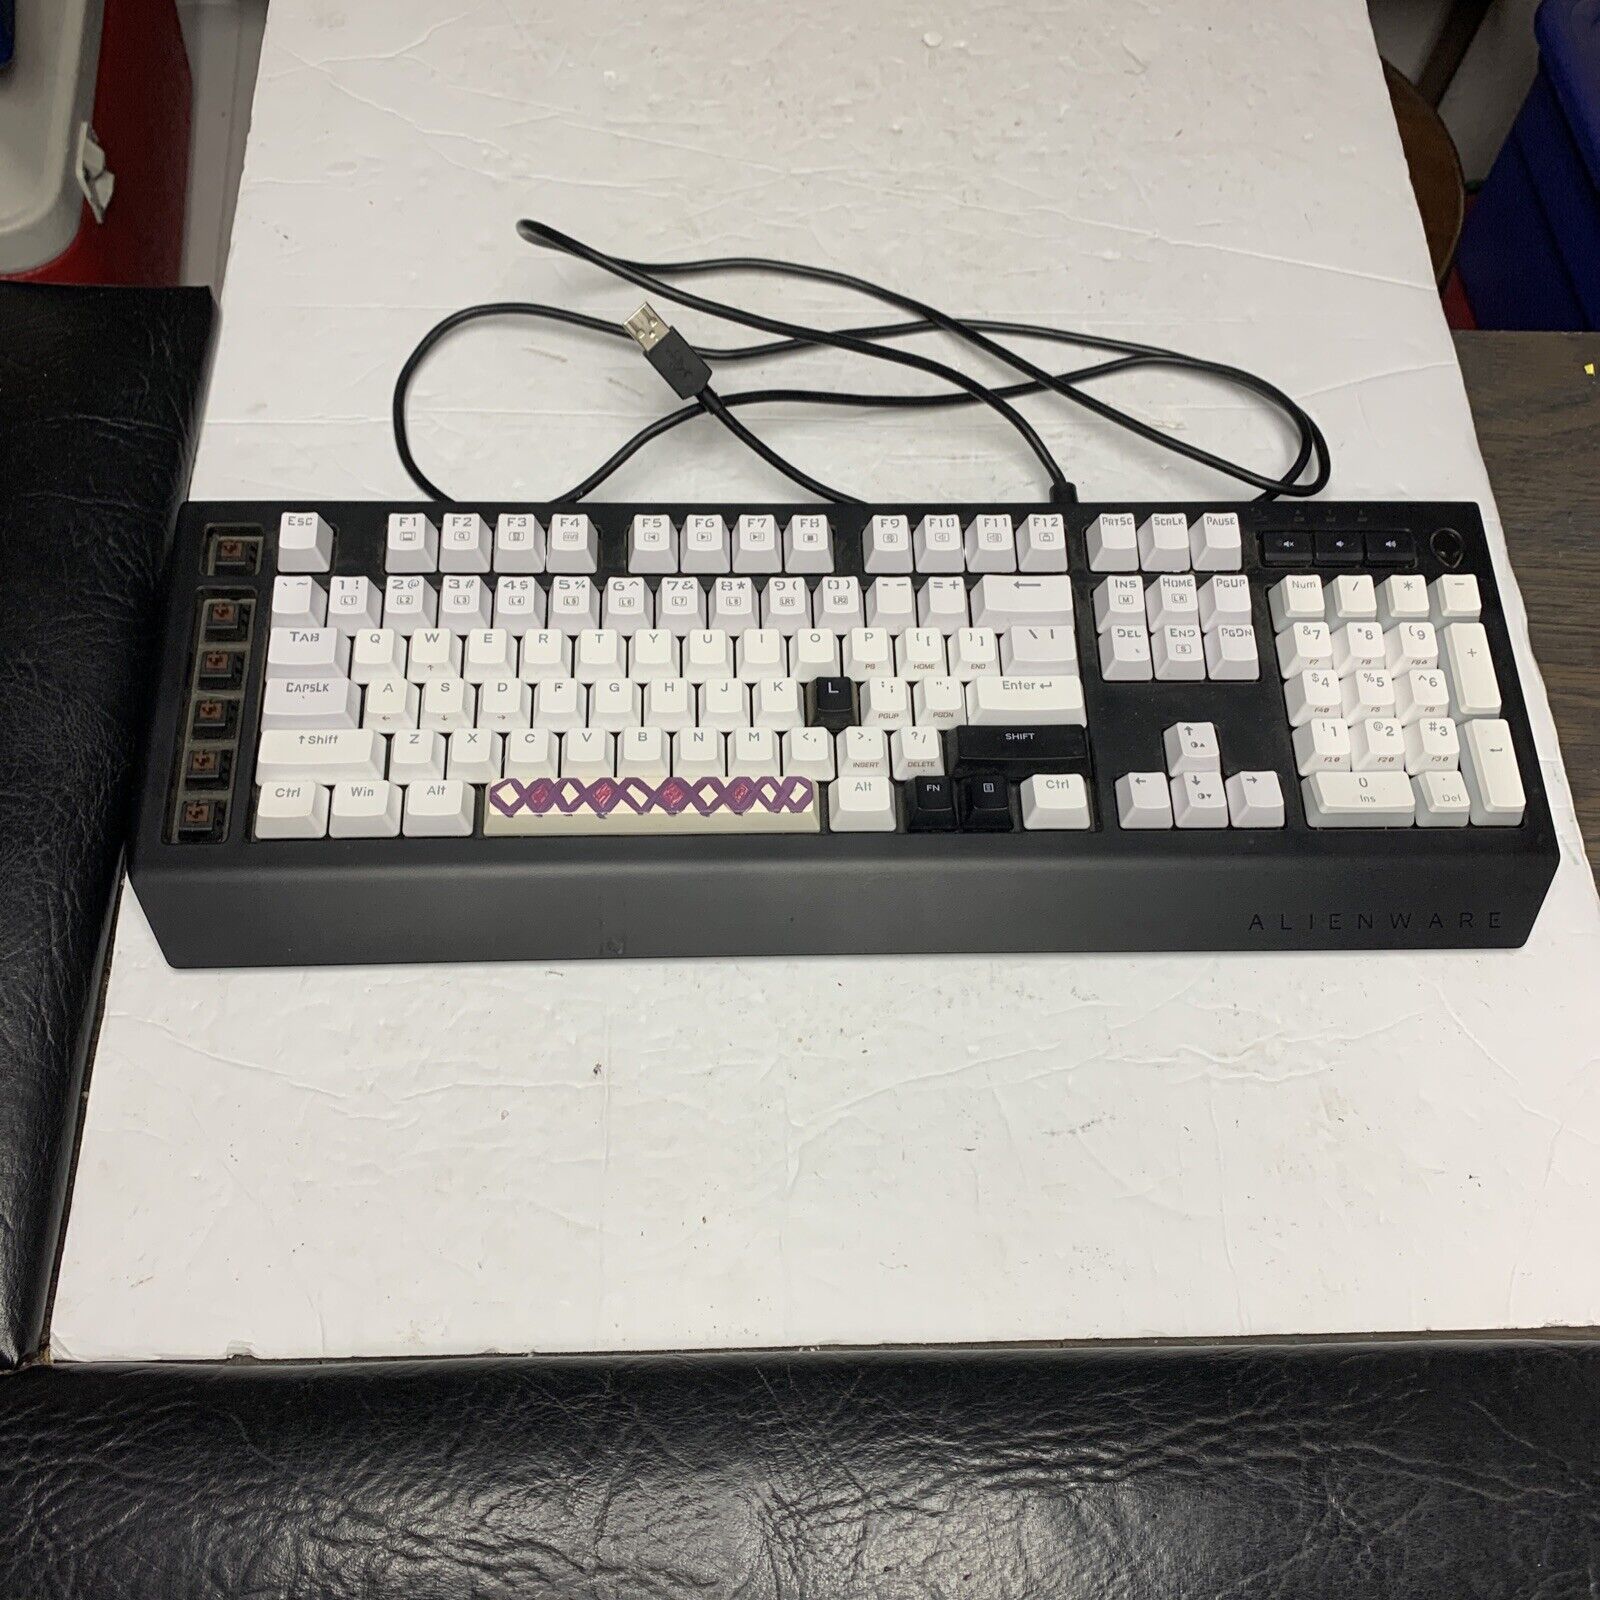 Alienware AW568 Gaming Mechanical RGB Backlit Keyboard - TESTED (Missing Keys)